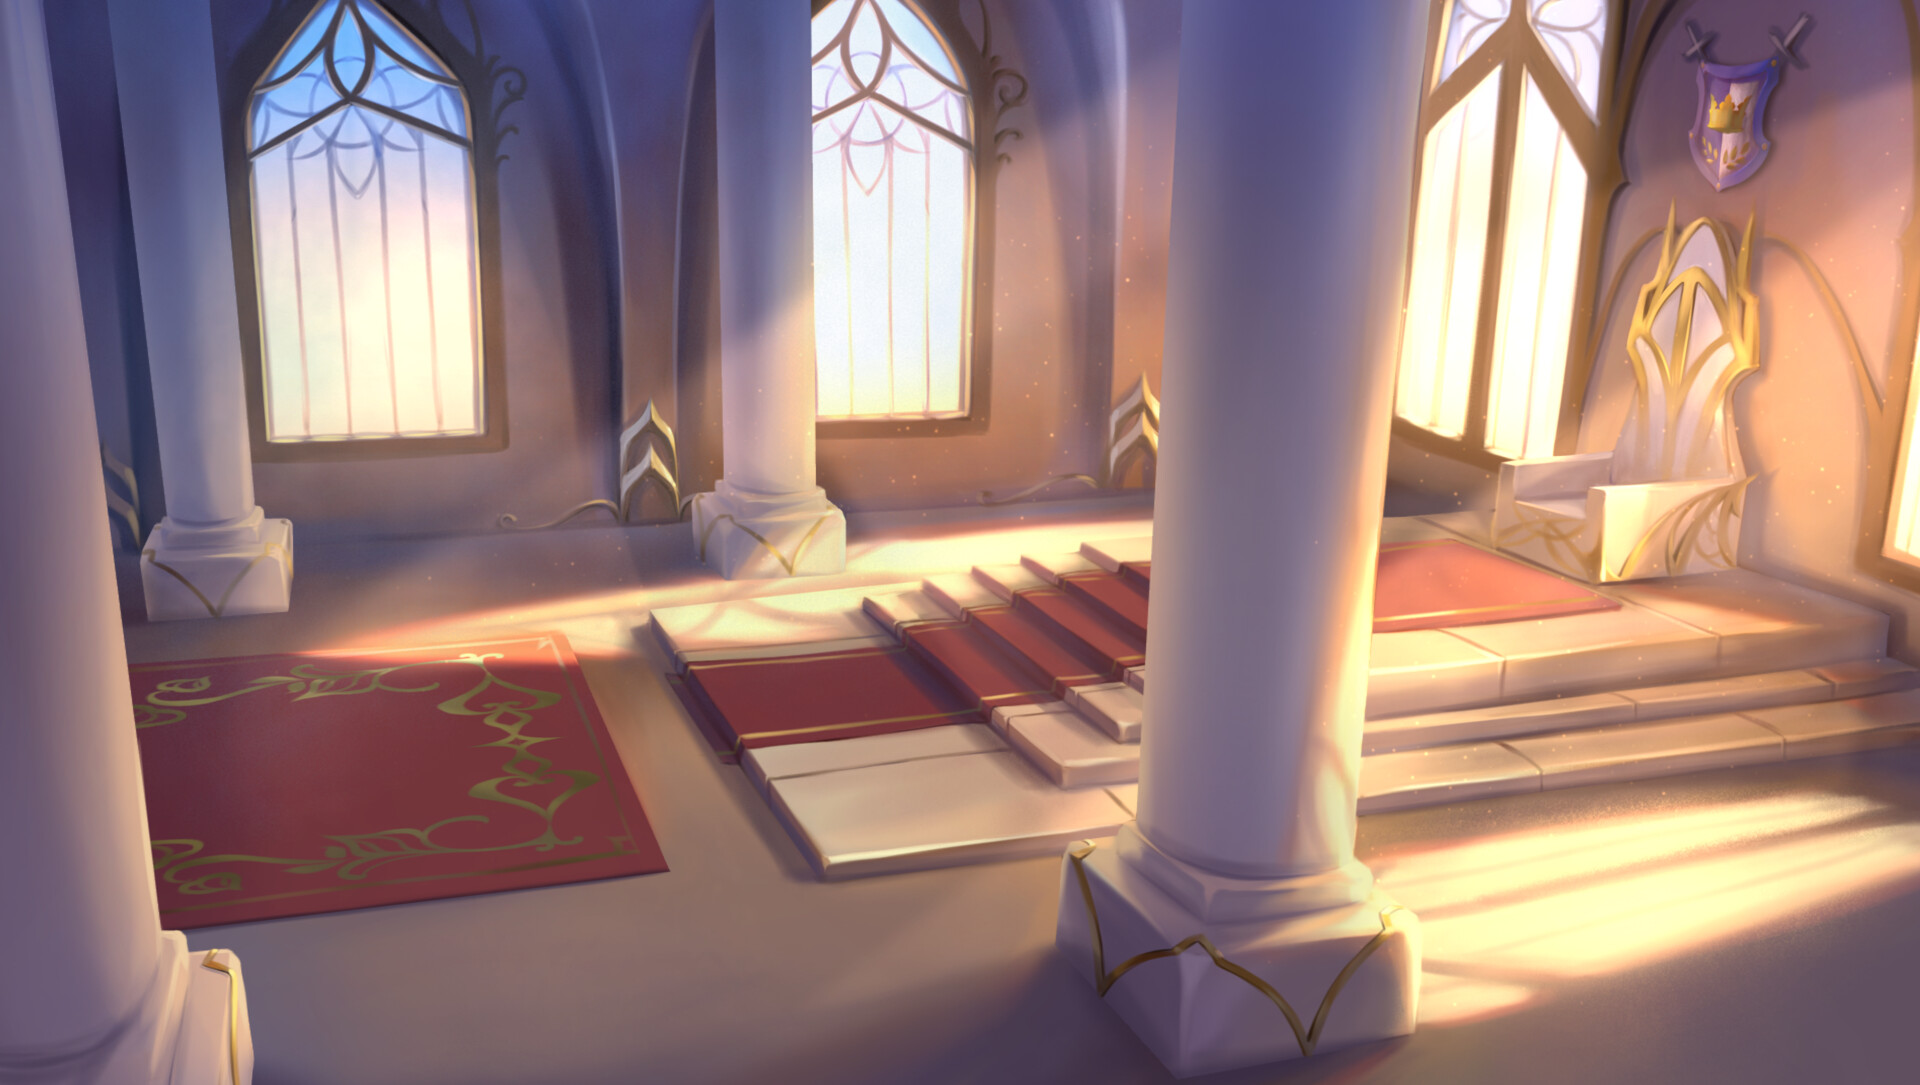 AI Art Generator: Gold throne room royal palace